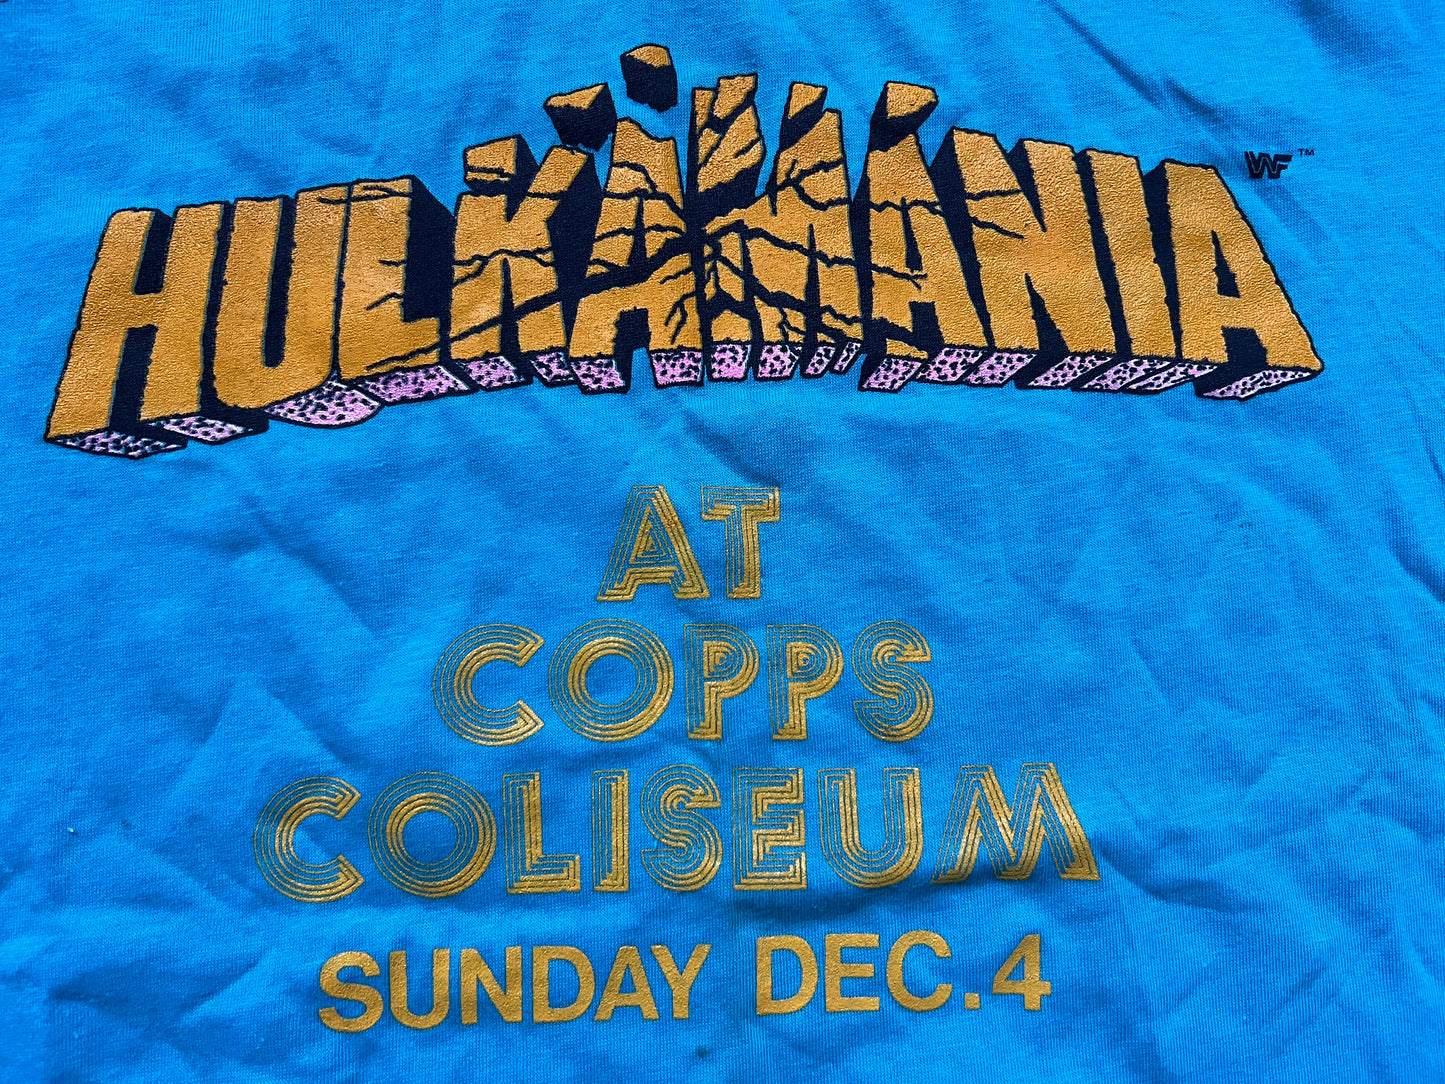 1988 WWF Hulk Hogan “Hulkamania” Copps Coliseum house show event exclusive shirt